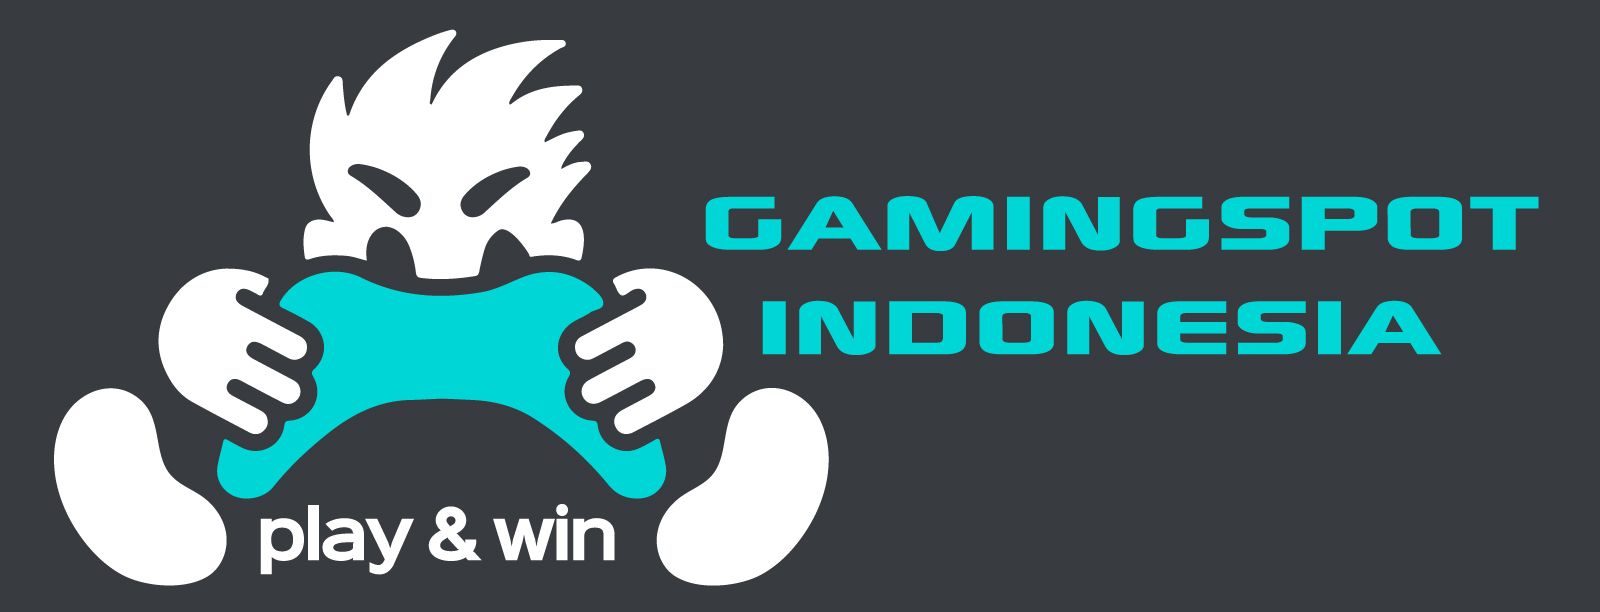 Gamingspot Indonesia